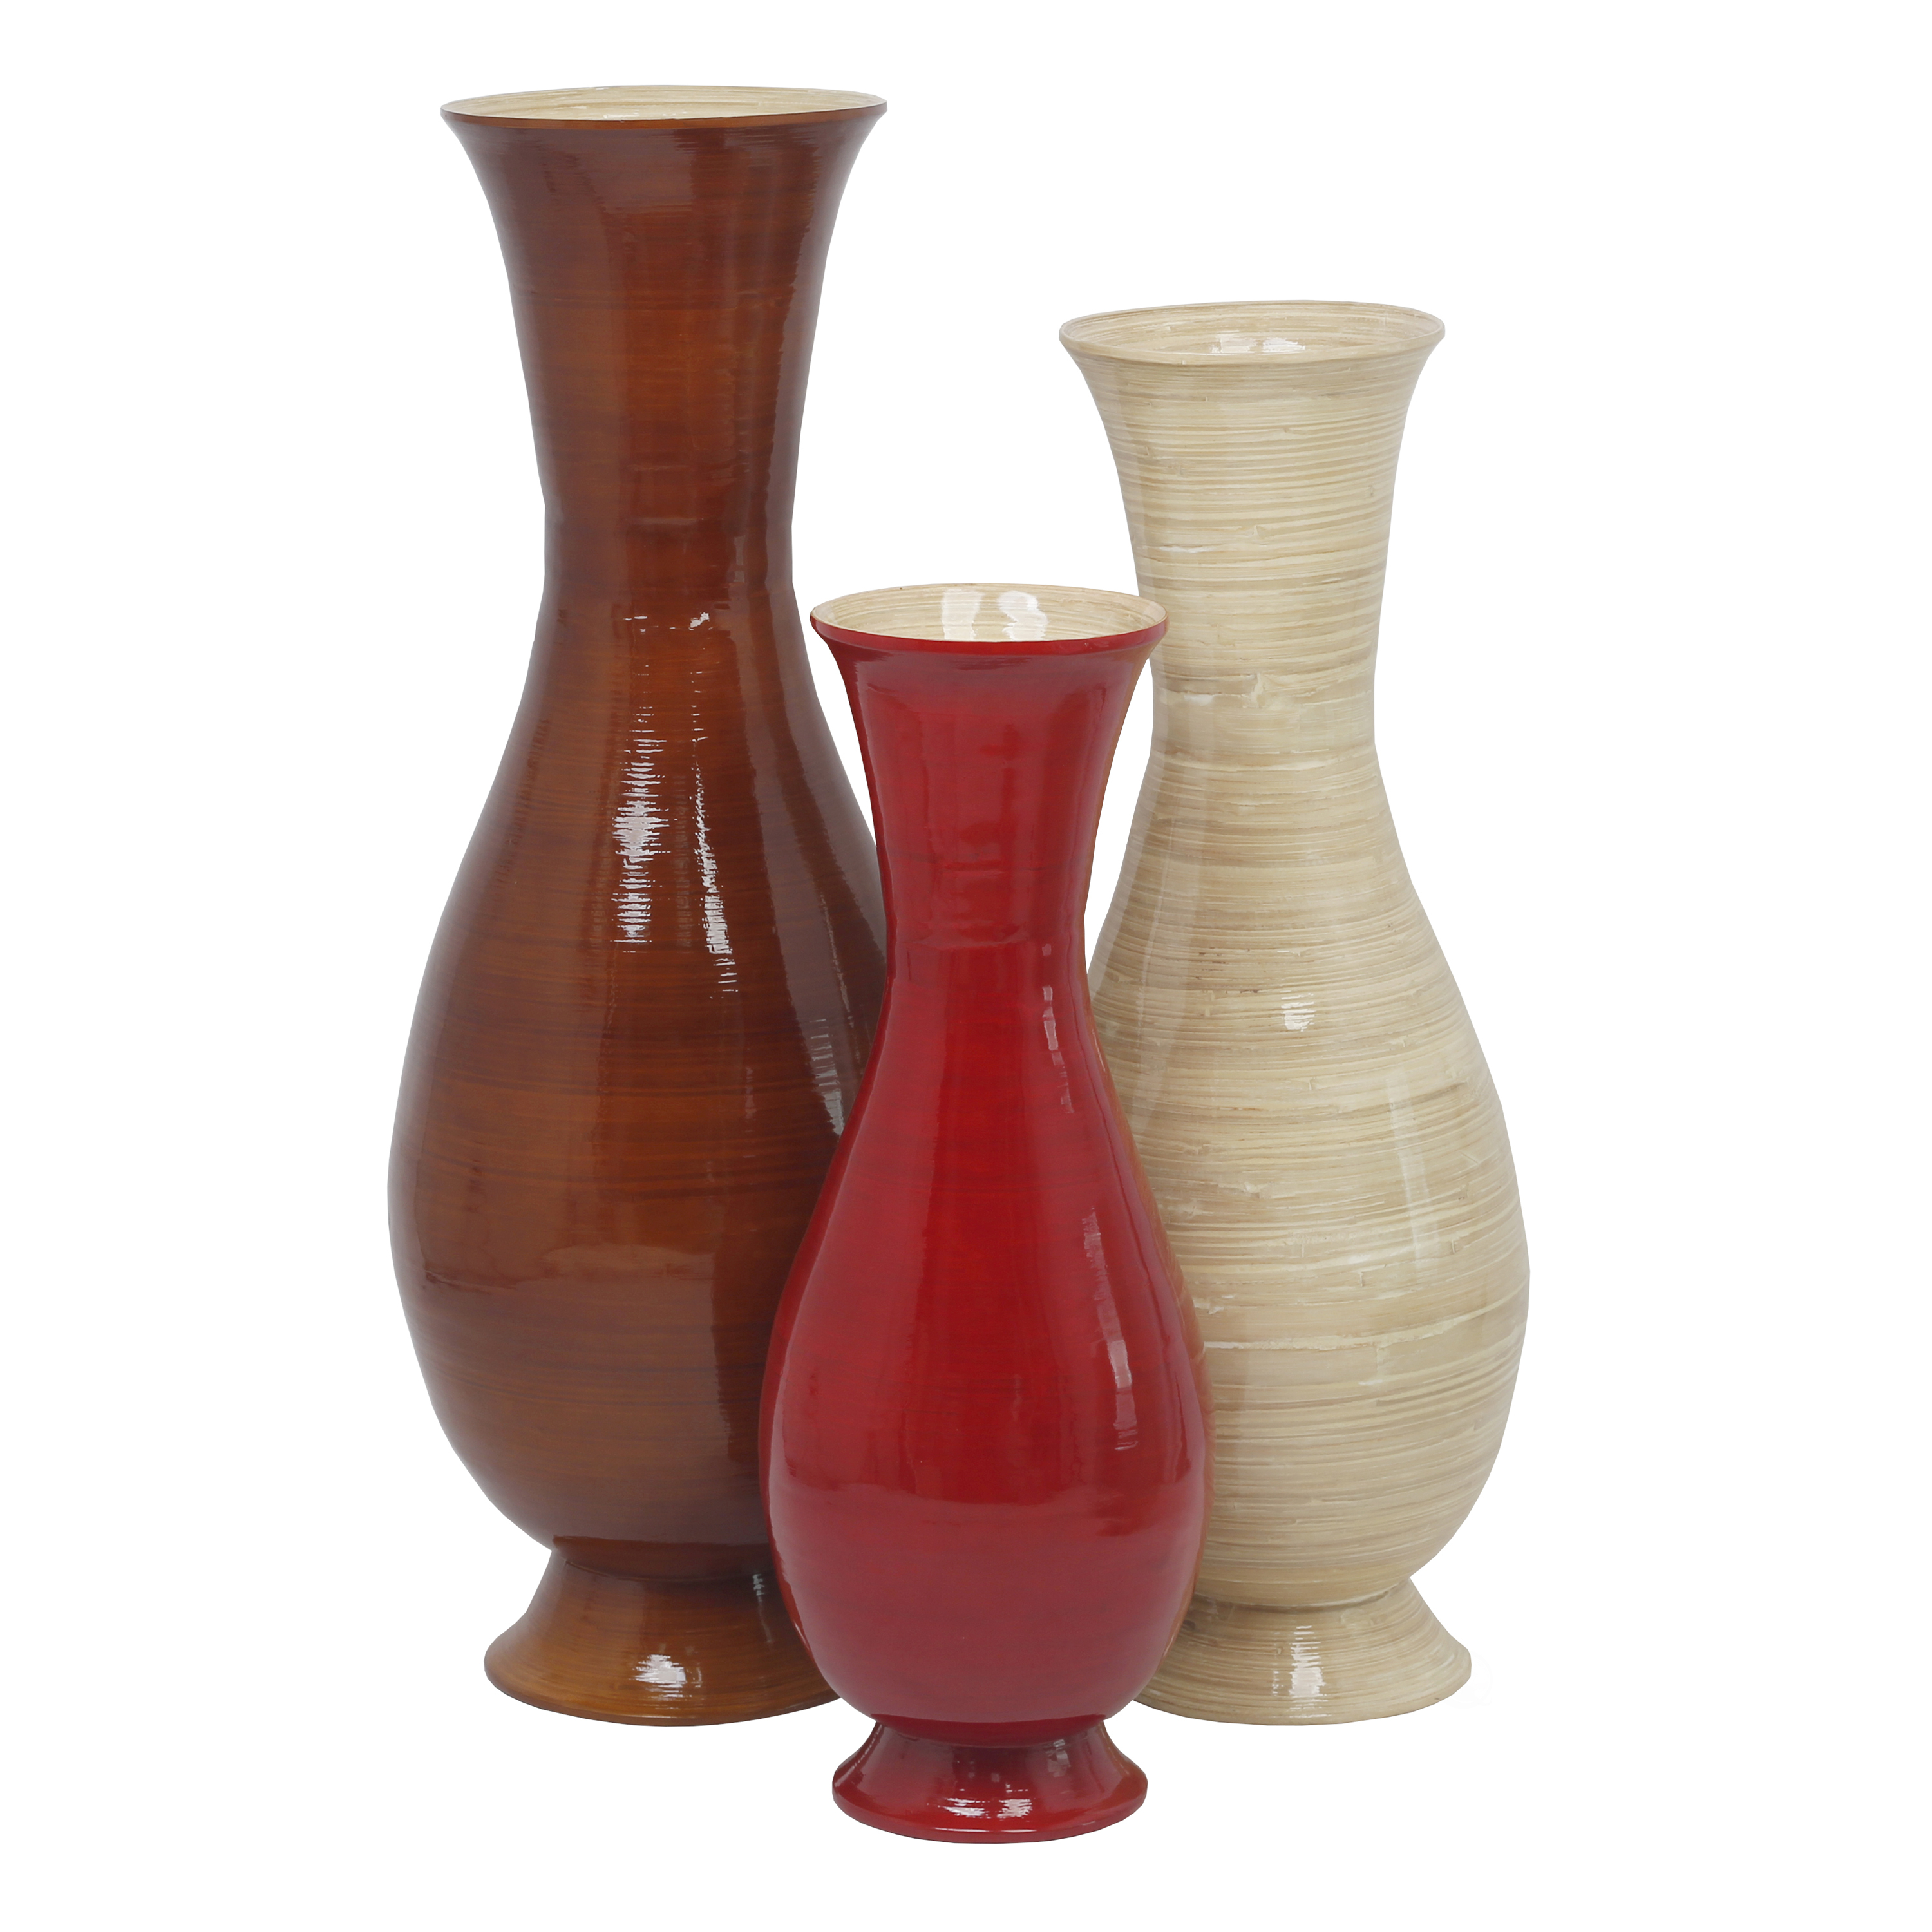 Tall Modern Decorative Floor Vase: Handmade, Natural Bamboo Finish, Contemporary Home DÃ©cor, Handcrafted Bamboo, Elegant Interior Design - M